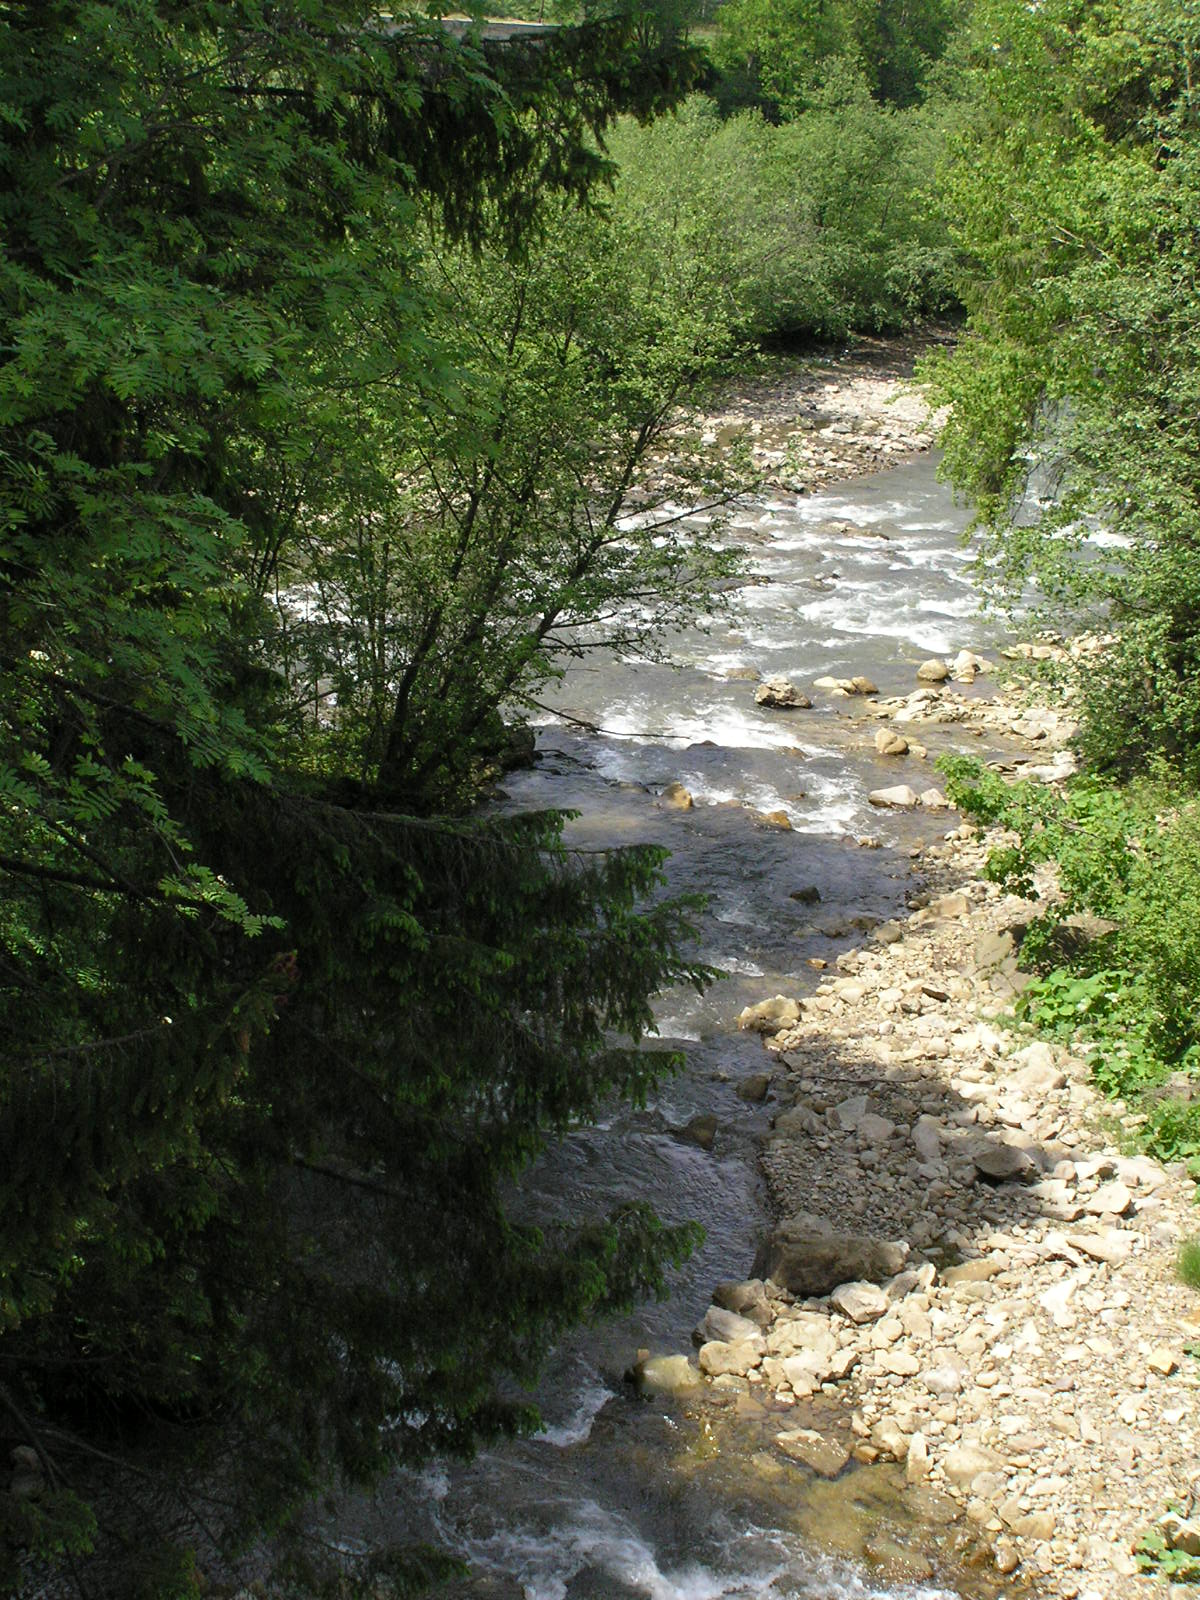 a small river runs through a wooded area